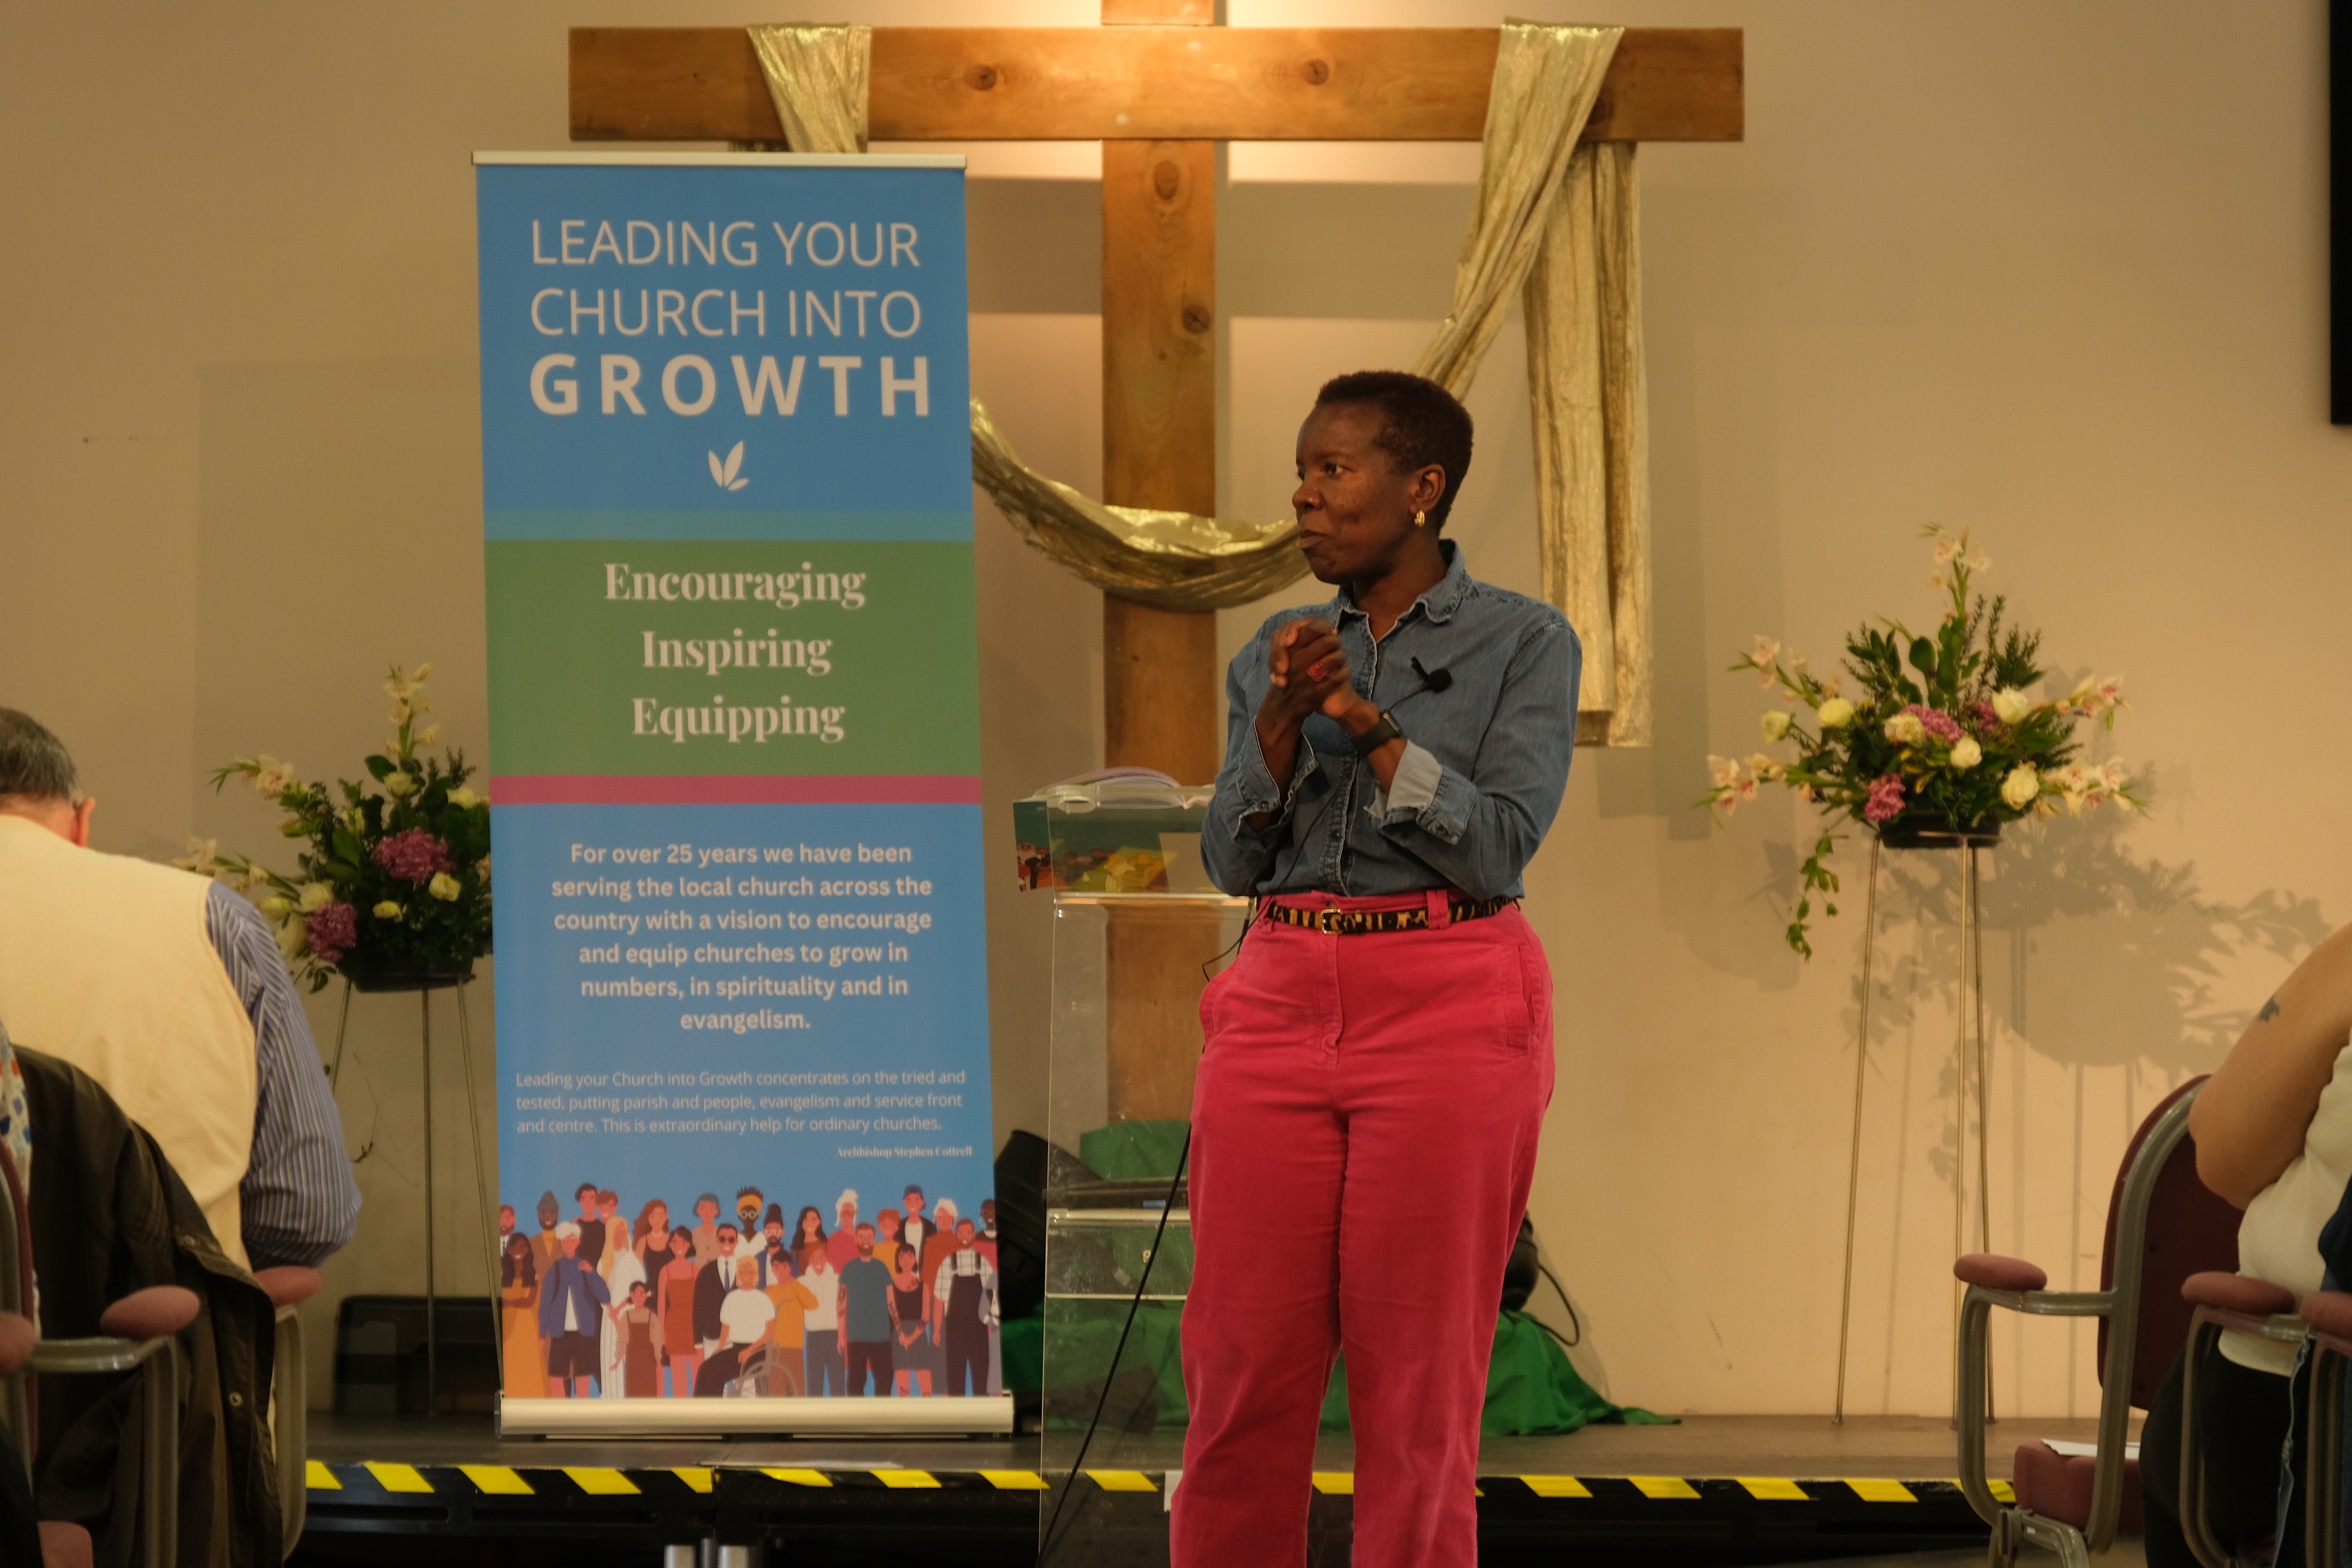 Rev Grace Sentamu Baverstock preaching at the LyCiG conference in Seasalter